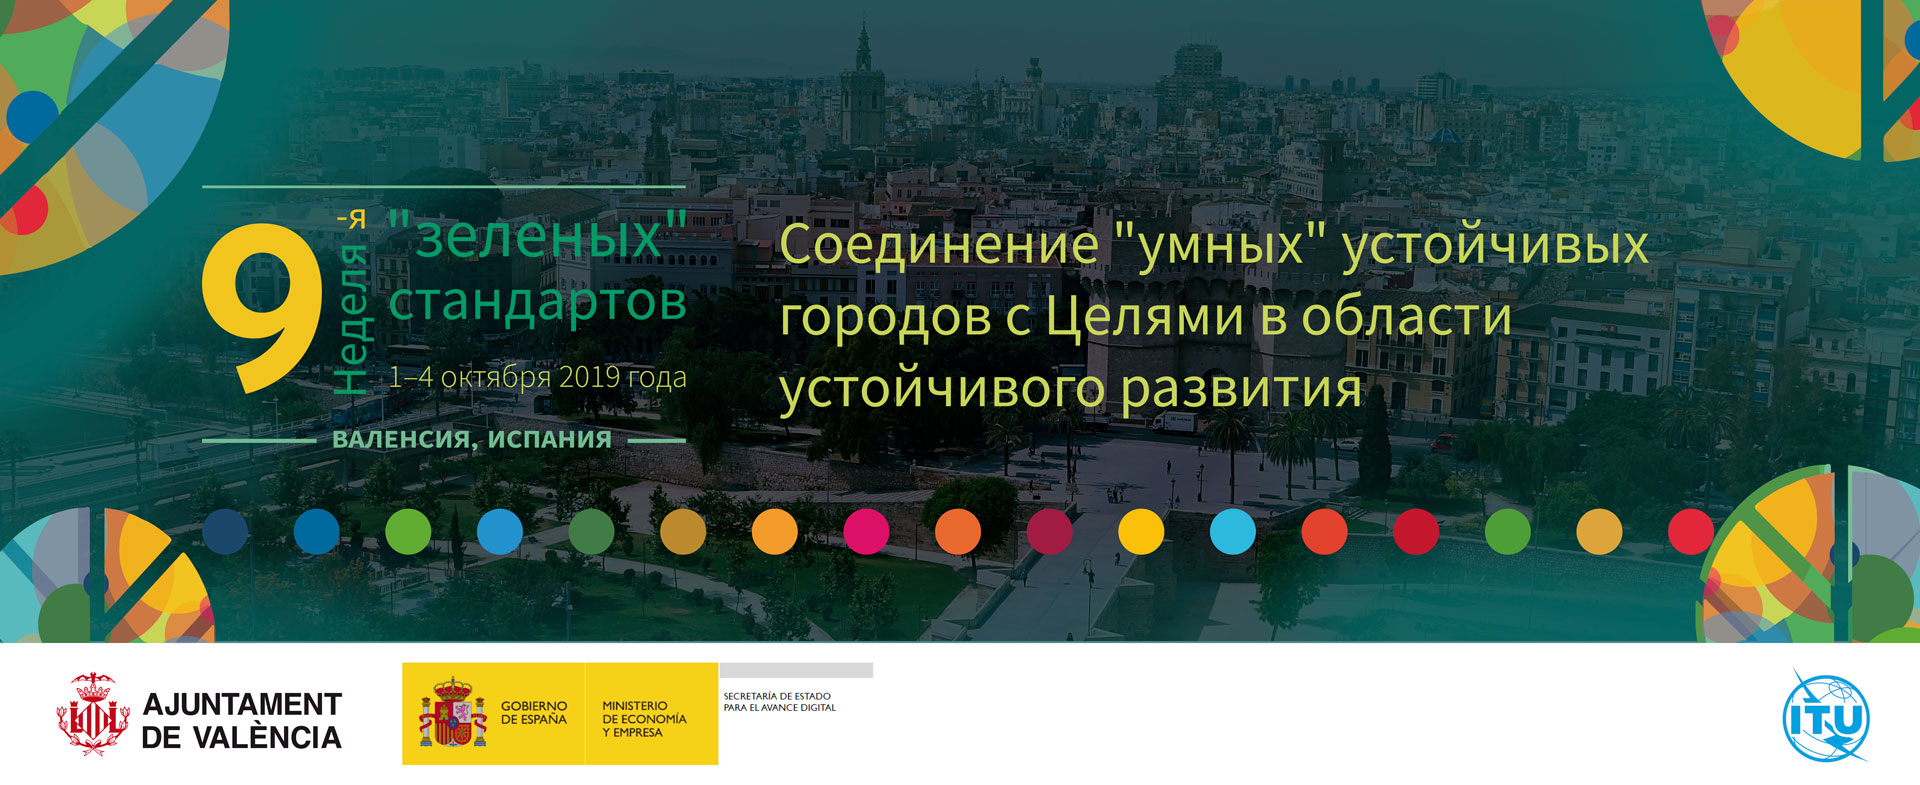 9th-green-standards-week_ITU-Valencia-1-4-October-2019__russian.jpg